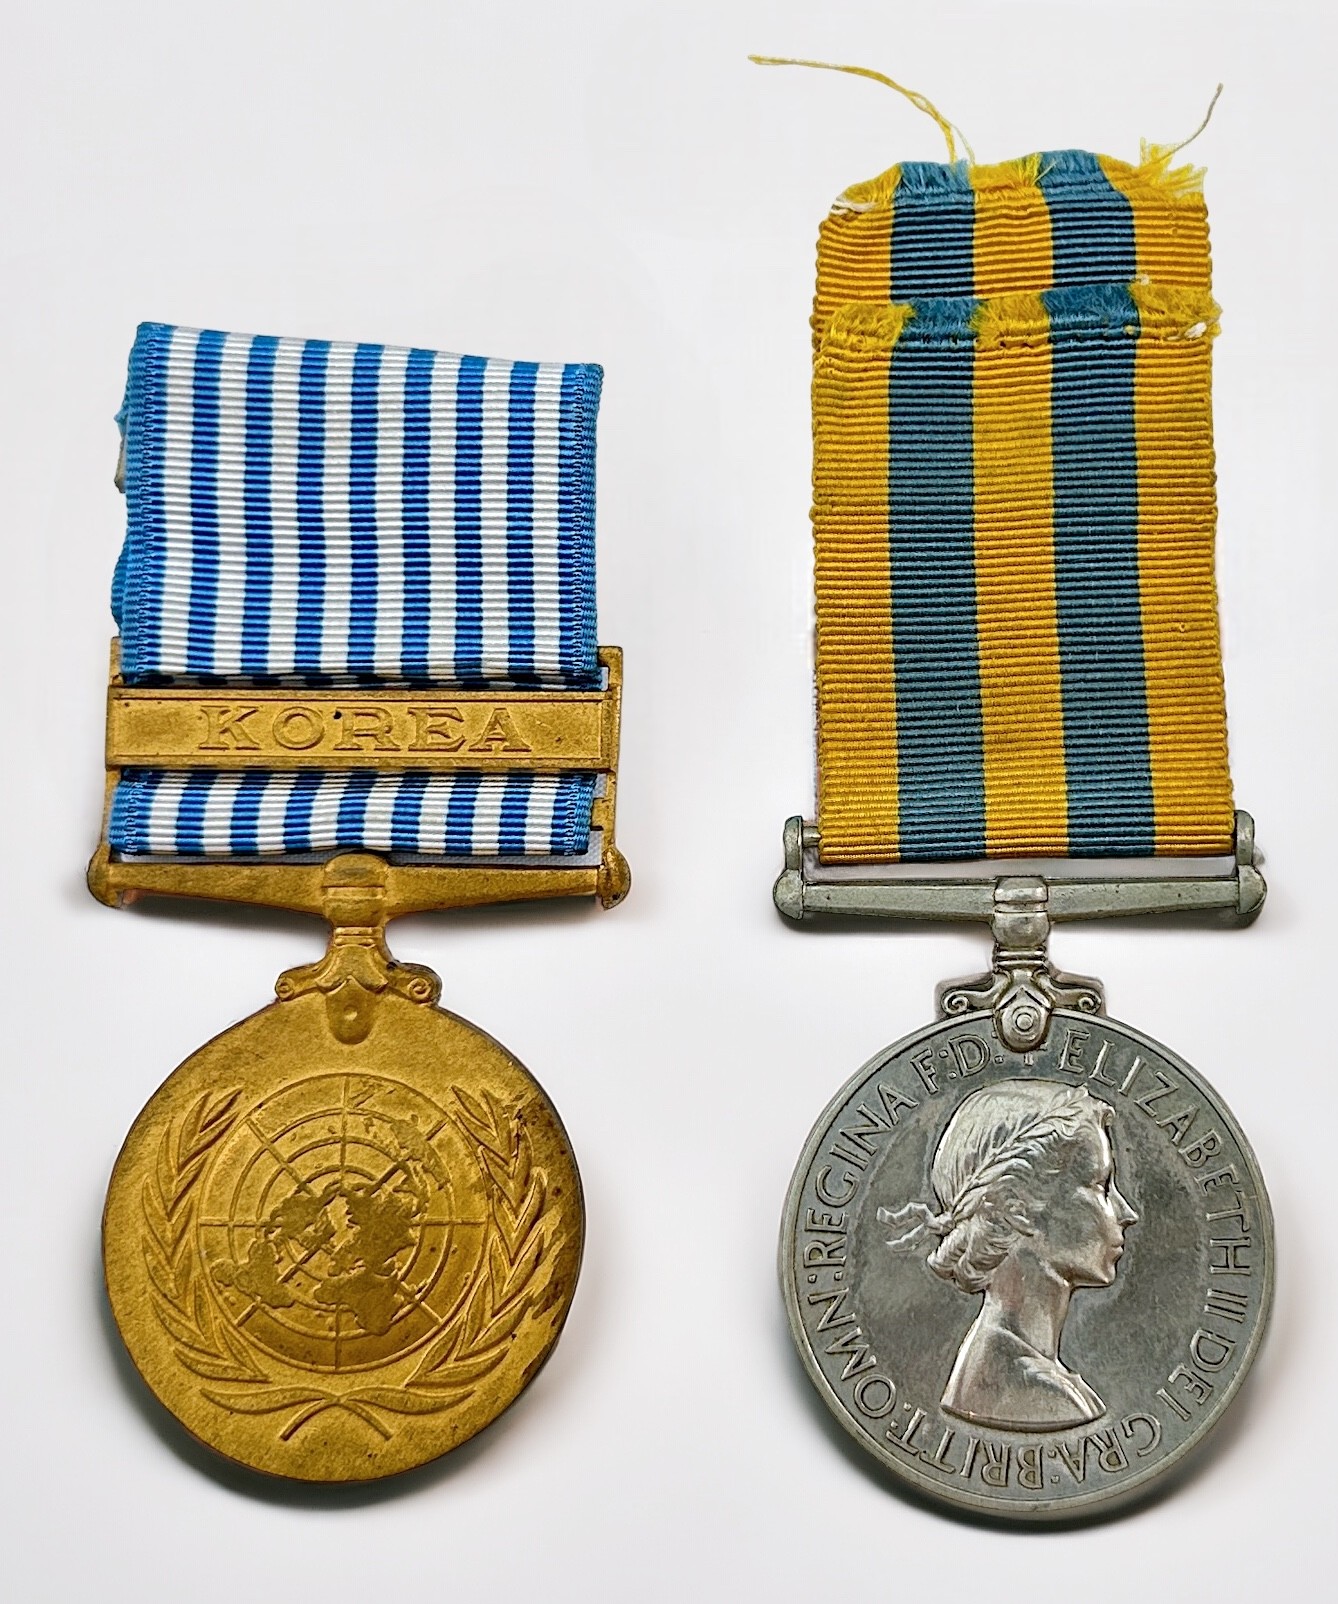 A Royal Army Service Corps Korea Medal and UN Korea Medal to T/22774586 DVR. T.N. EYNON. R.A.S.C.